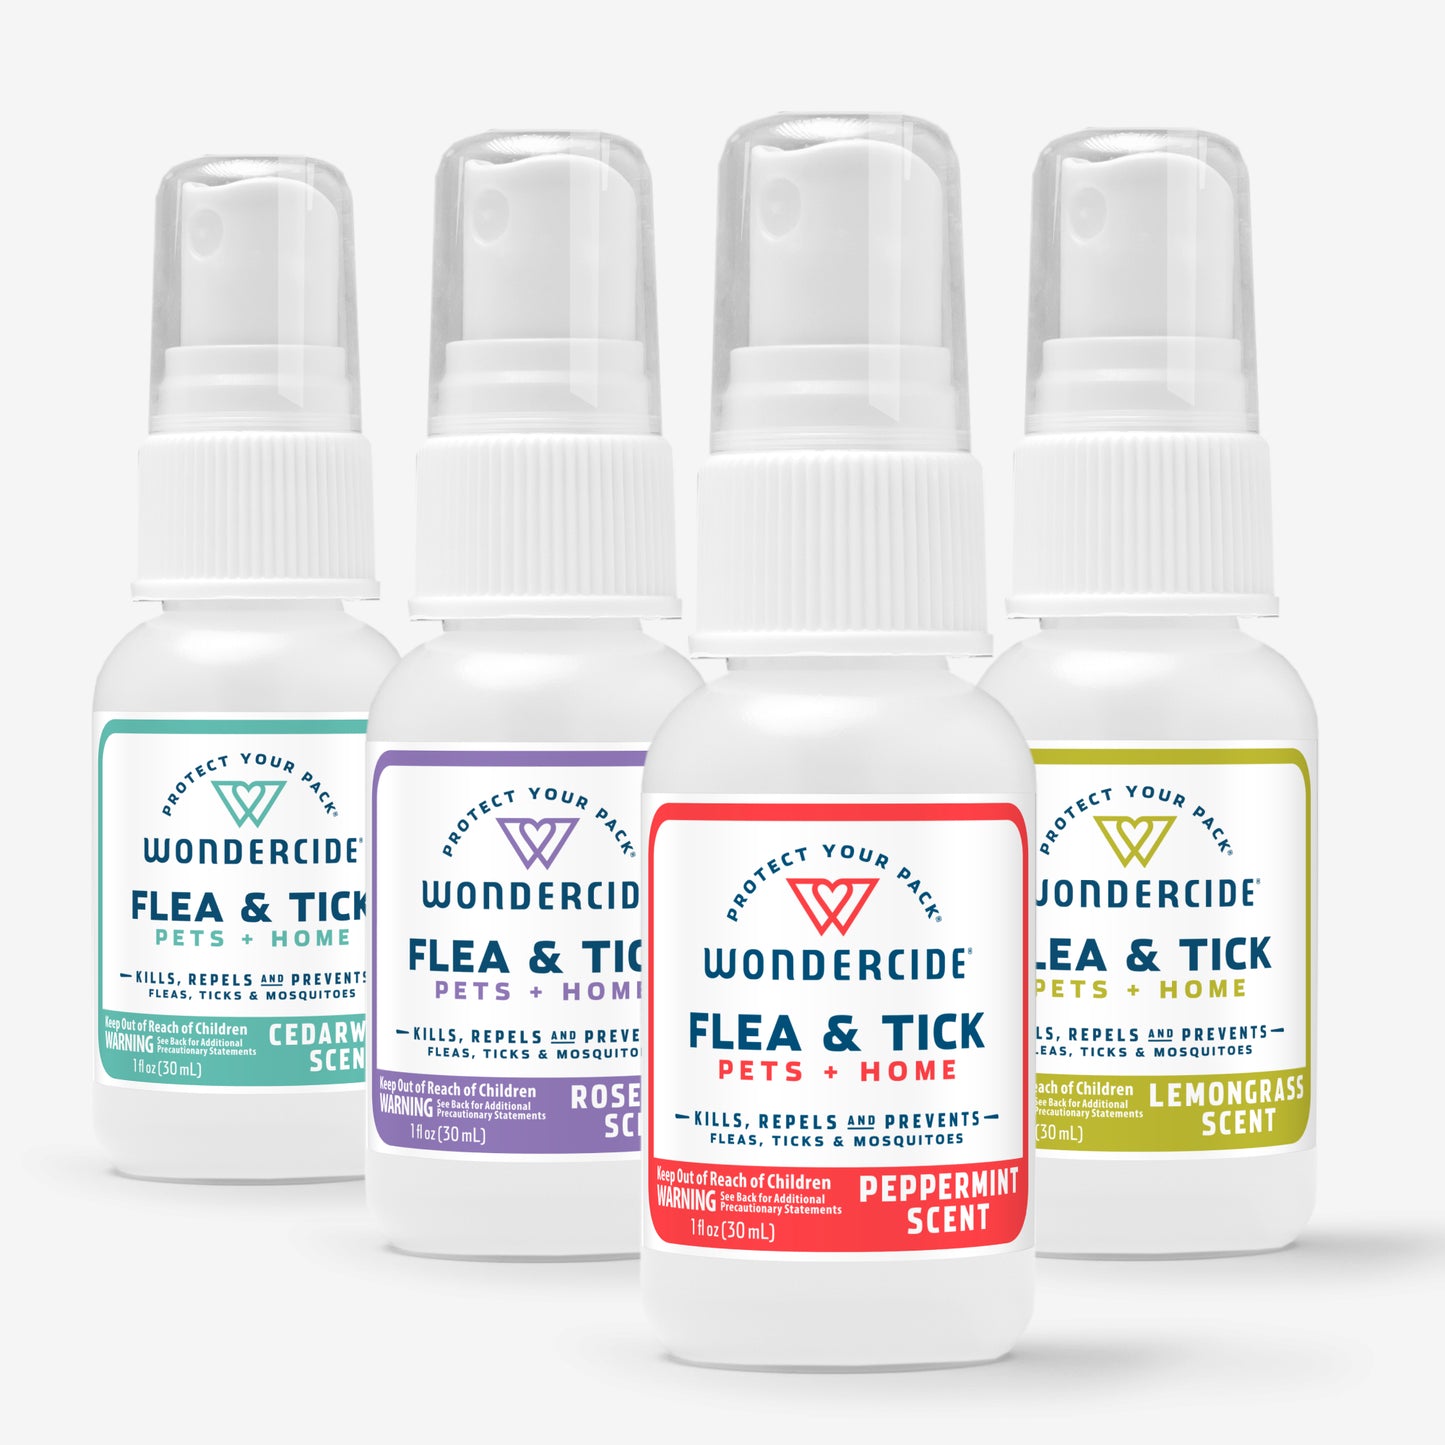 Flea & Tick Spray Scent Sampler with Natural Essential Oils